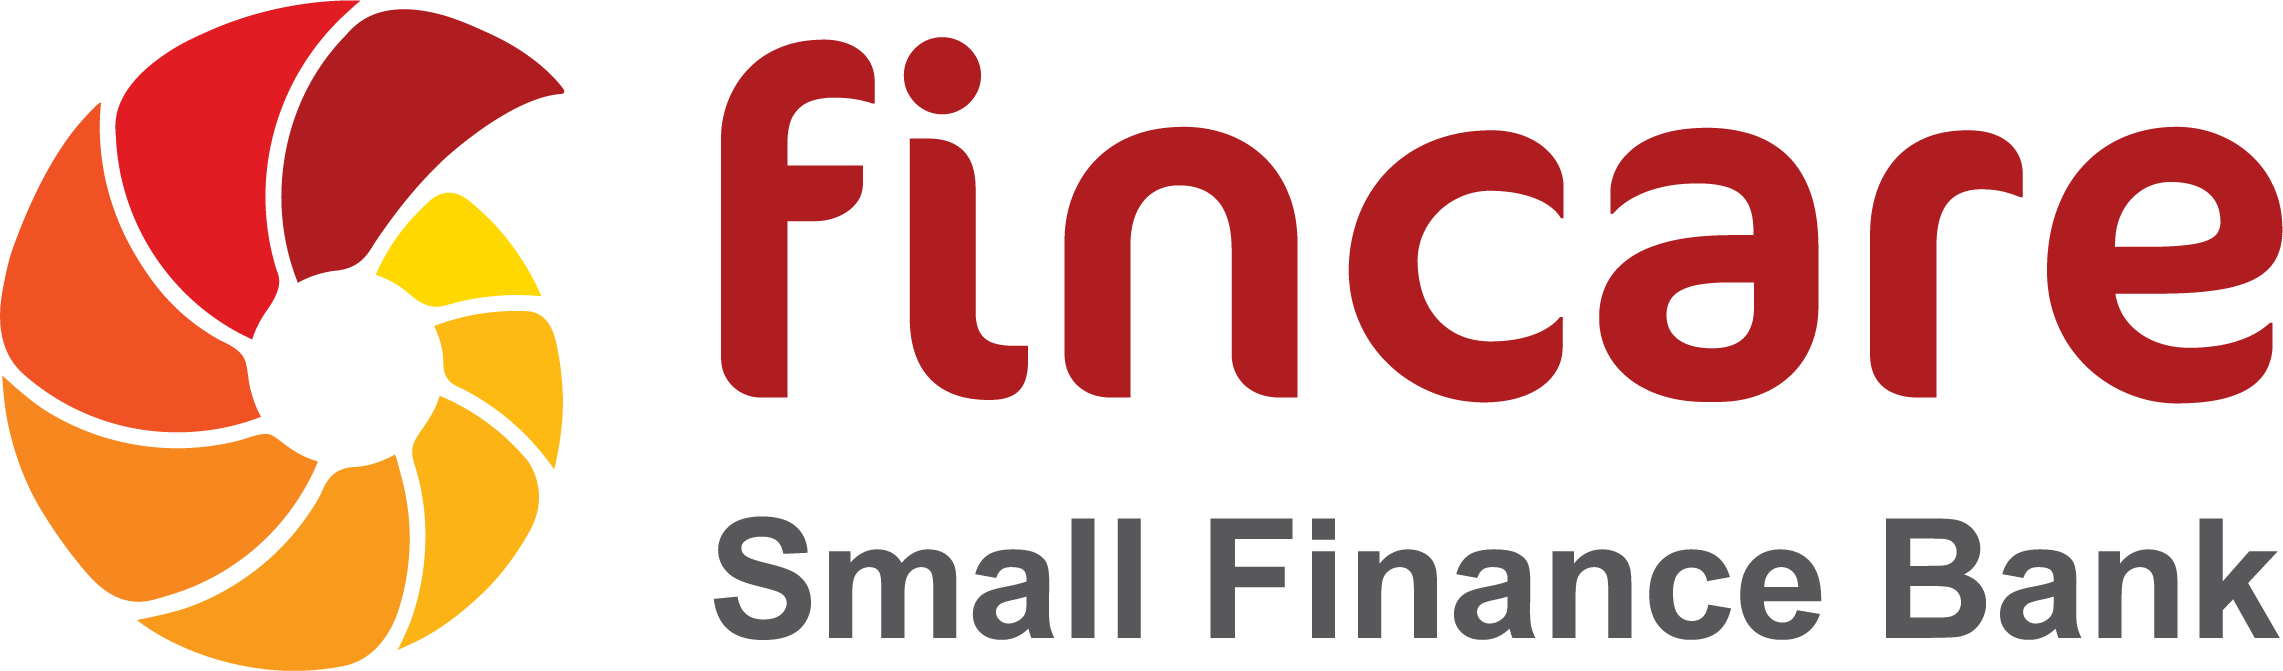 Fincare Small Finance Bank (2283x671)